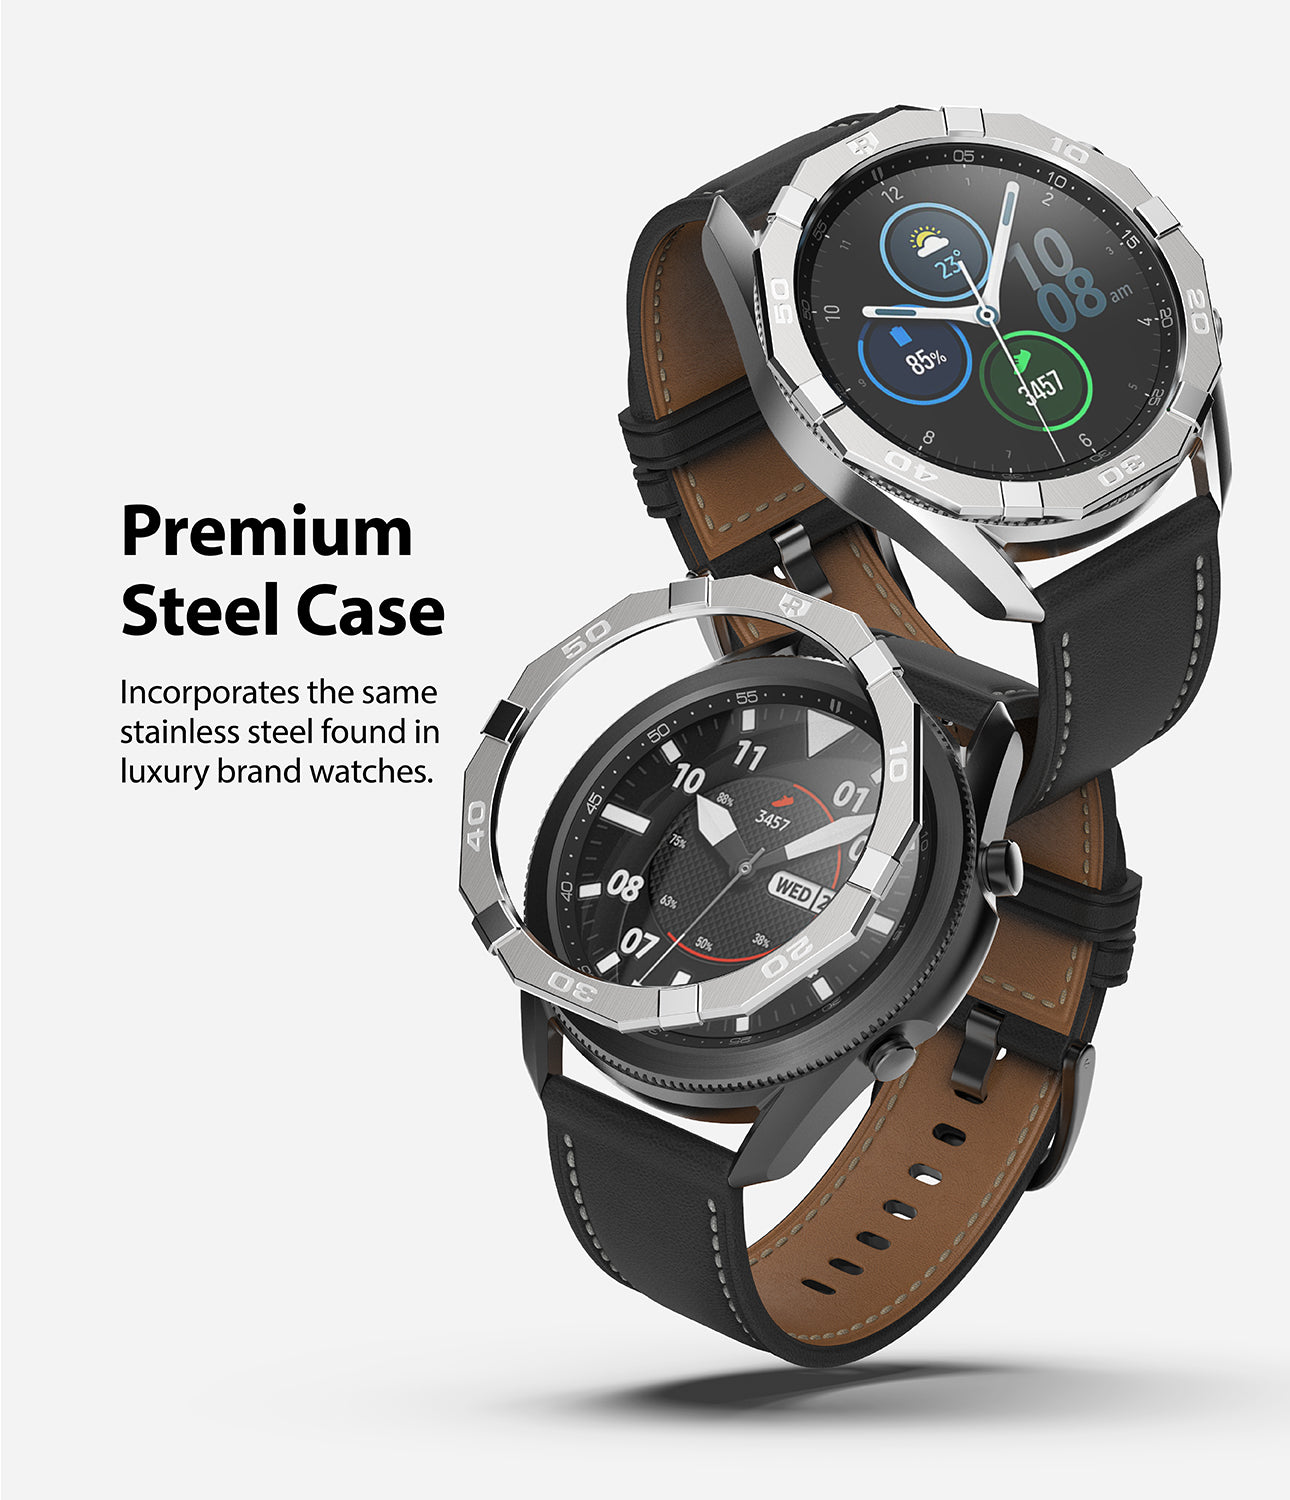 premium steel case - incorporates the same stainless steel found in luxury watch brands